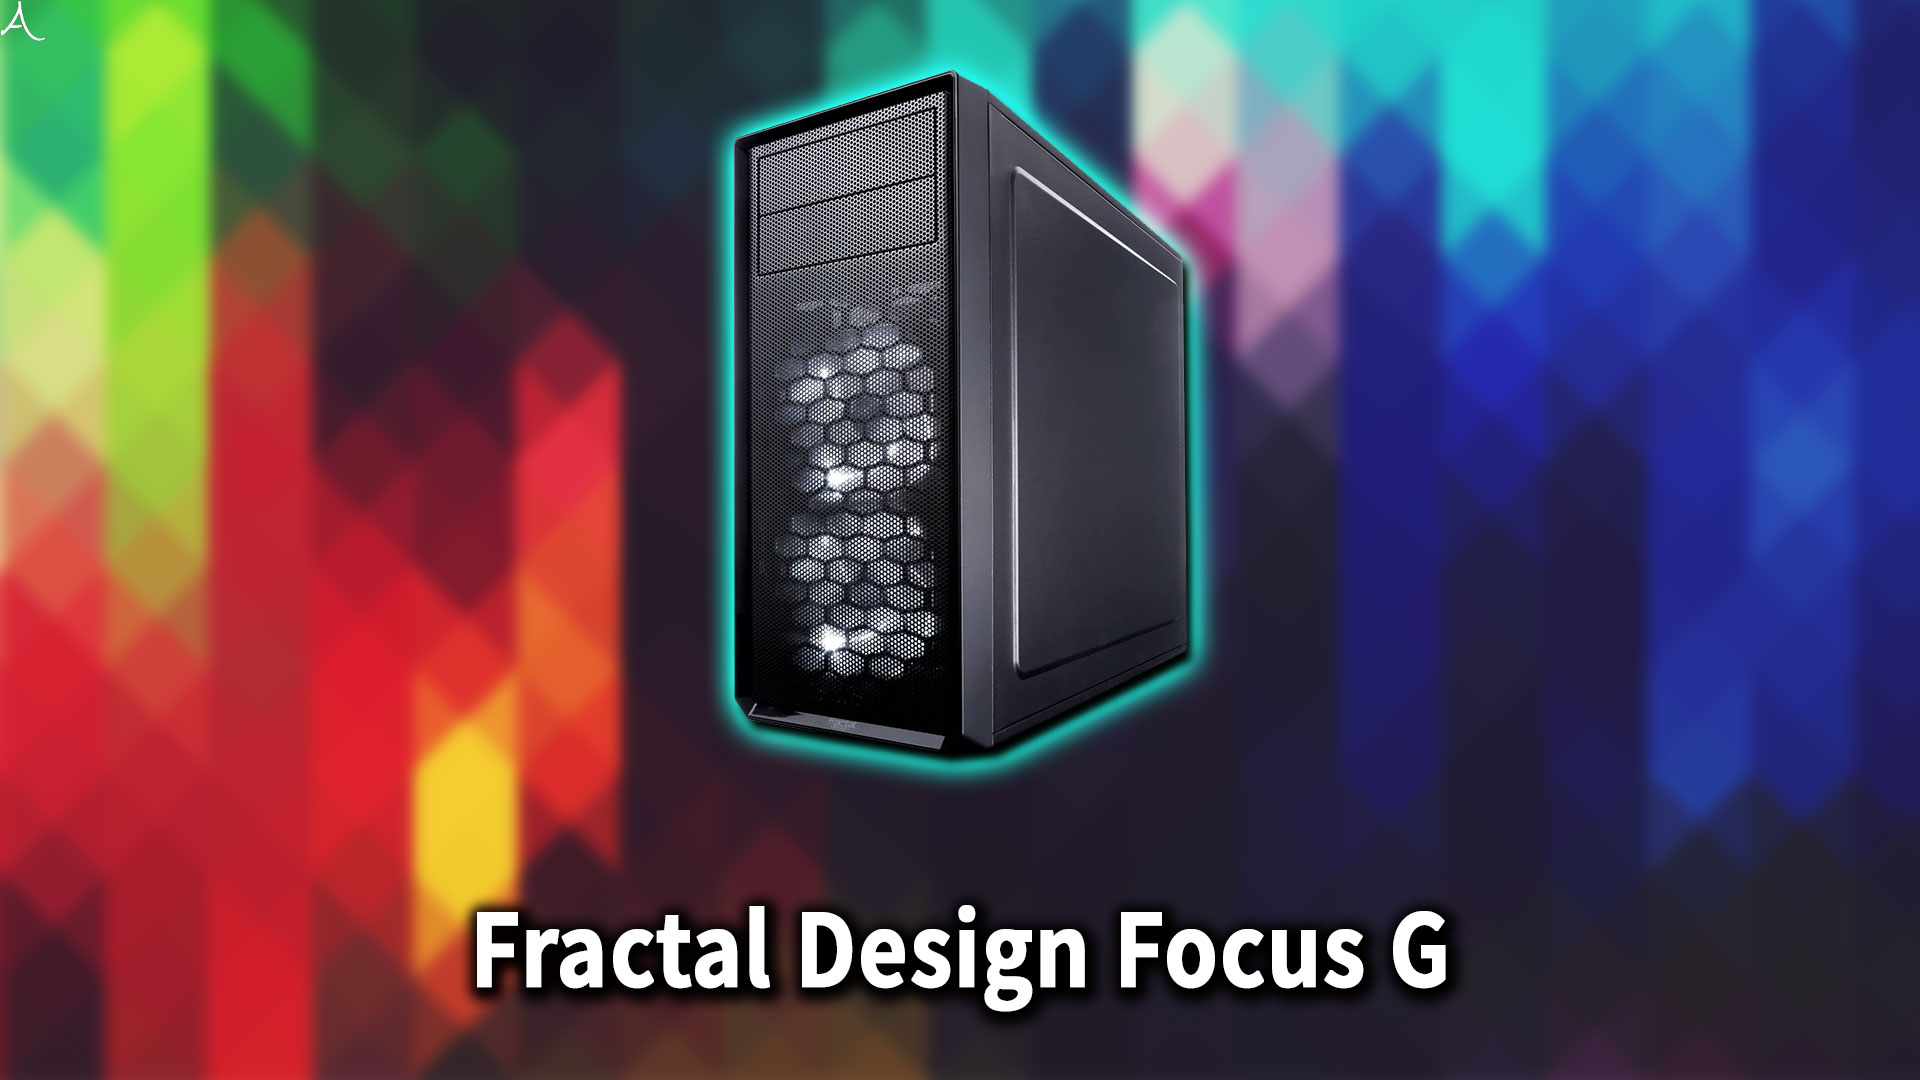 ｢Fractal Design Focus G｣のサイズ・大きさはどれくらい？